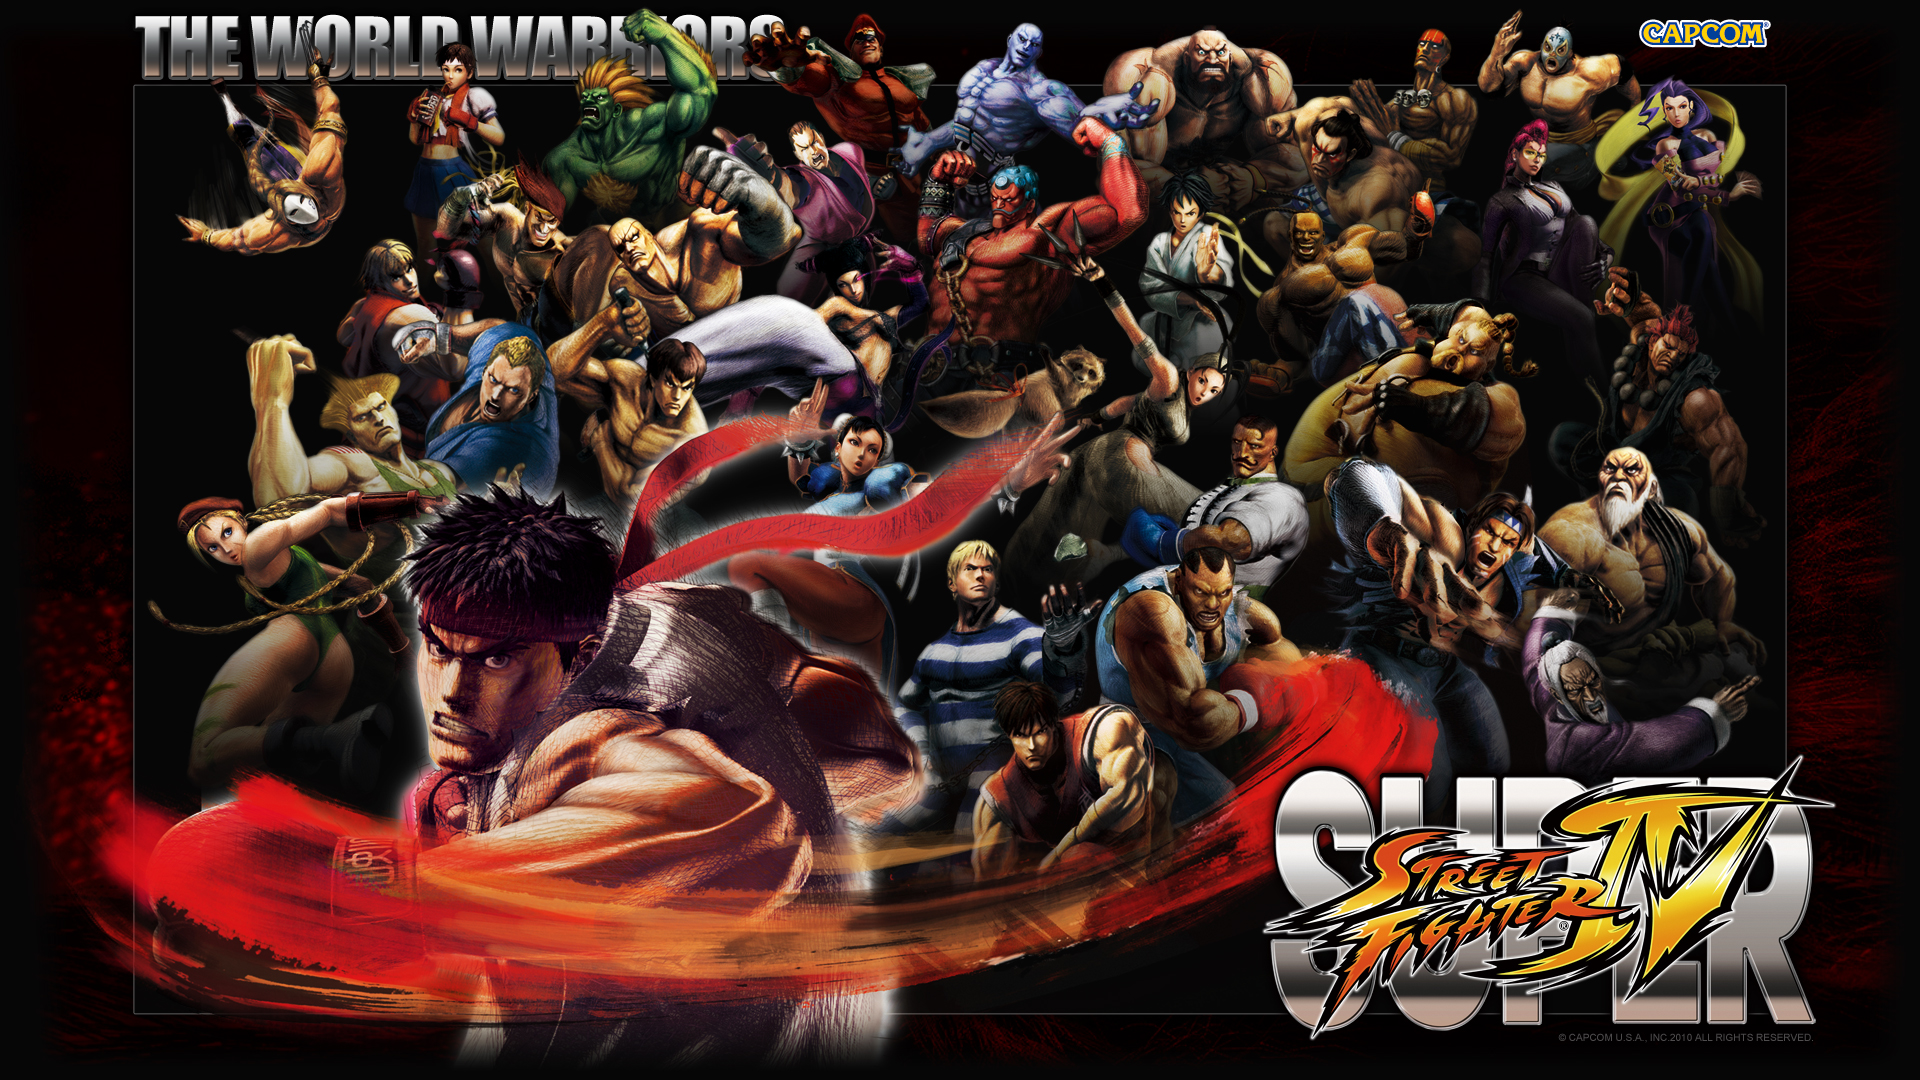 Super Street Fighter IV Backgrounds on Wallpapers Vista